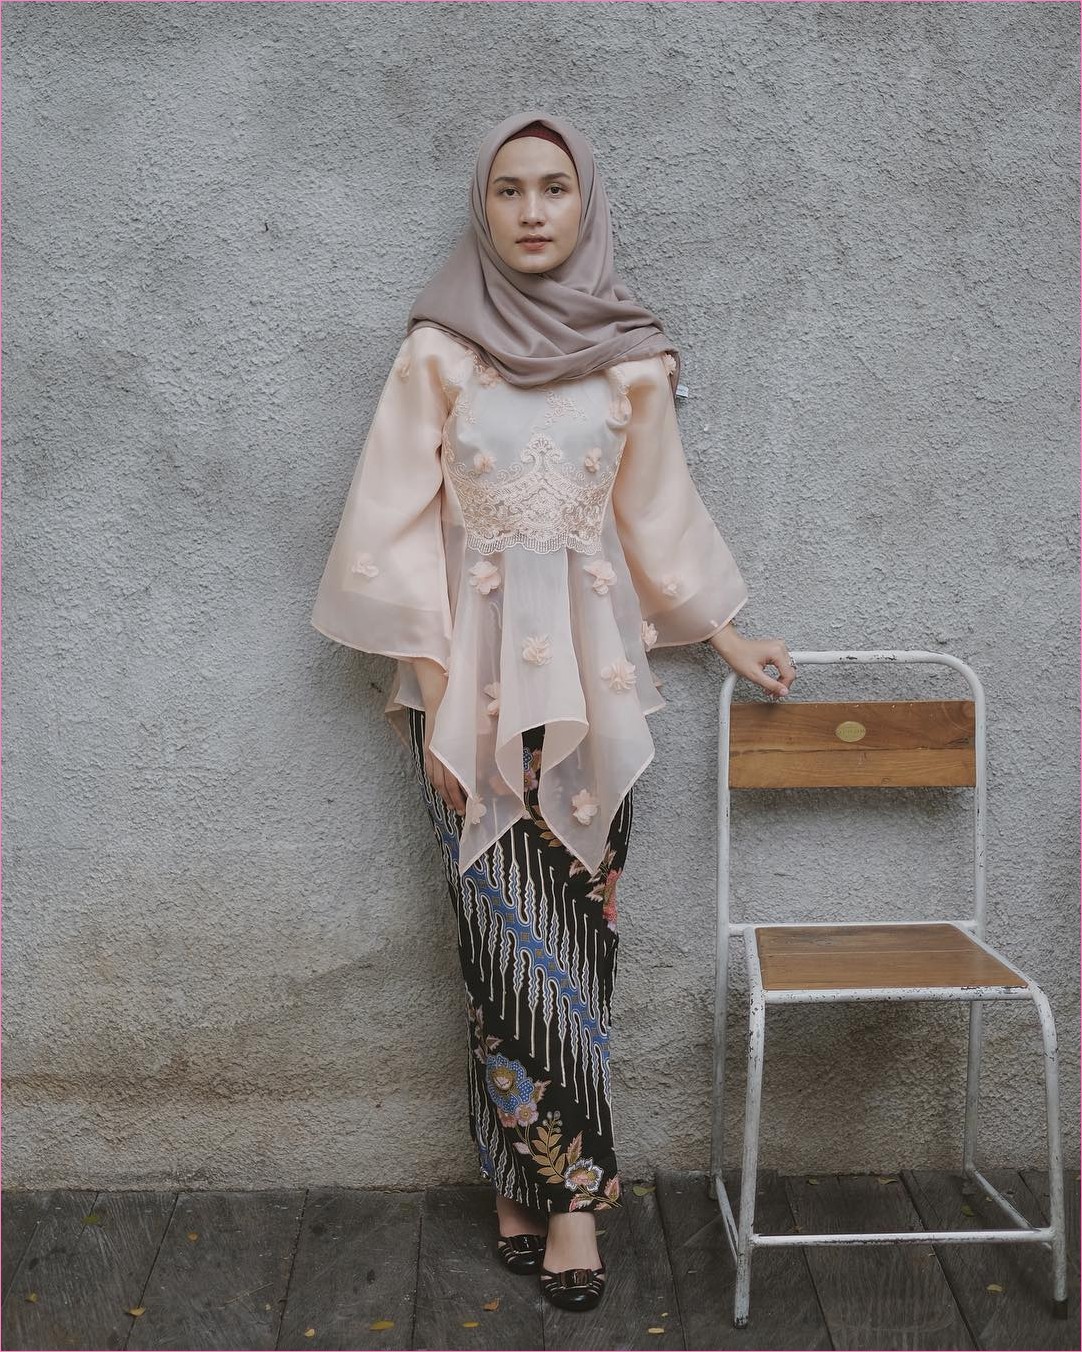  Desain model baju kondangan muslimah berhijab modern baik kebaya maupun dress yang dikena 22 Outfit Baju Kondangan Berhijab Ala Selebgram 2018